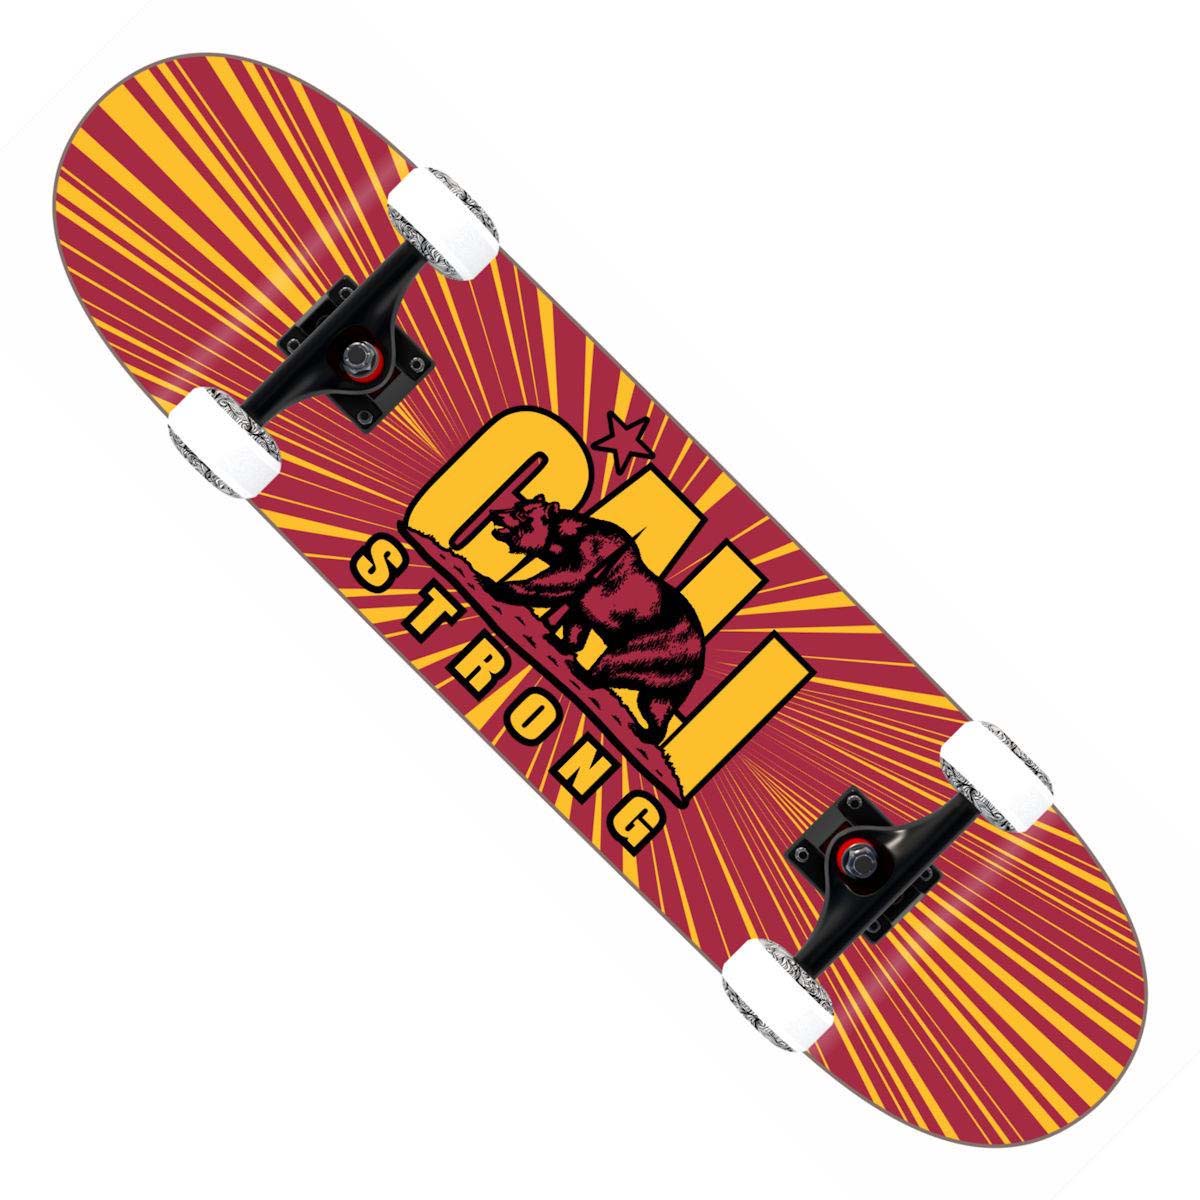 CALI Strong Original Trojan Skateboard Trick Complete - Trick Skateboard - Image 1 - CALI Strong